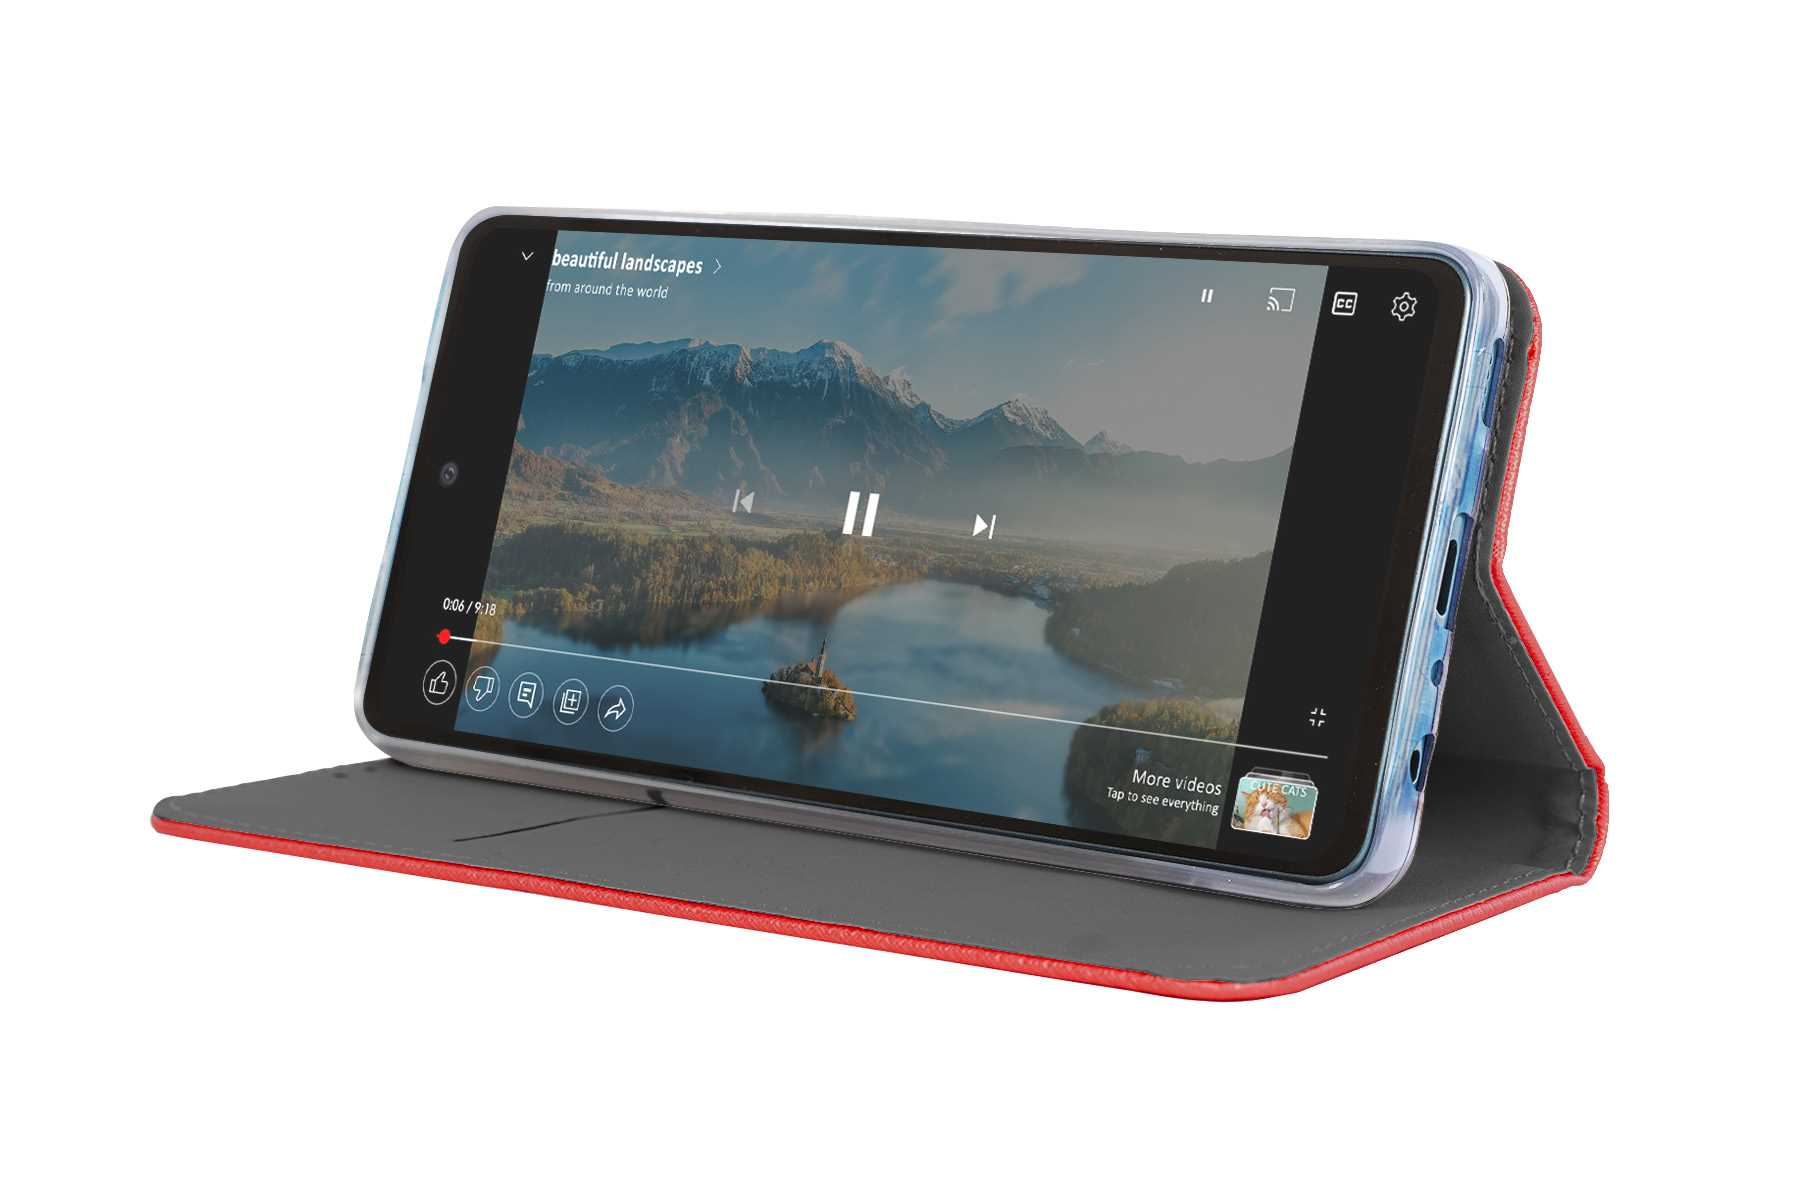 MTB MORE ENERGY Smart Redmi Xiaomi, Magnet Rot Bookcover, 12C, Klapphülle